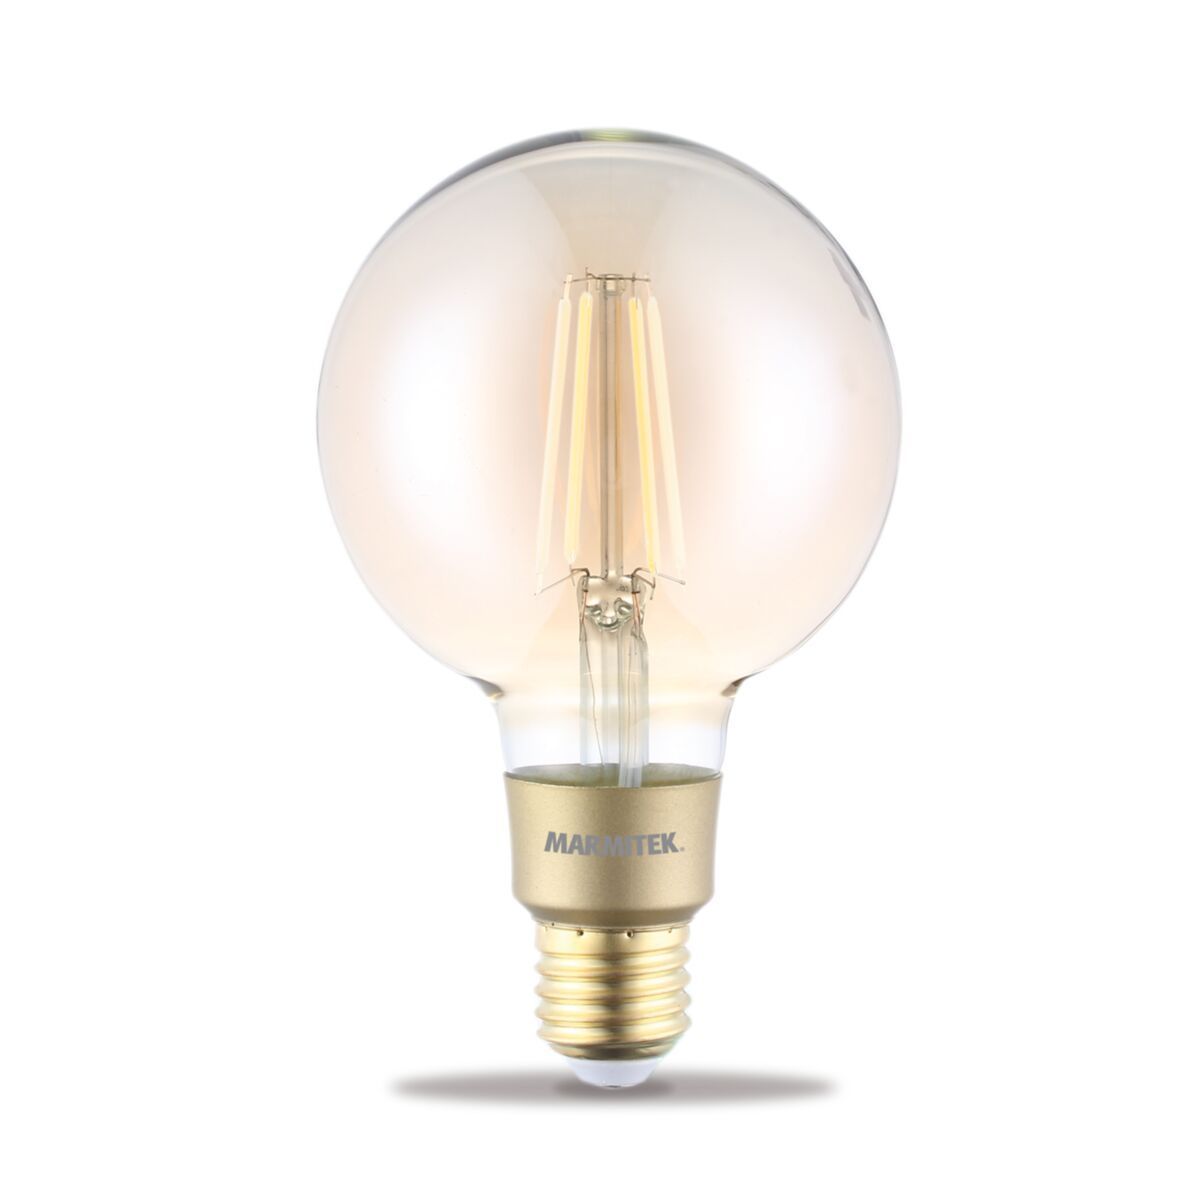 Marmitek Glow LI - Slimme filament lamp